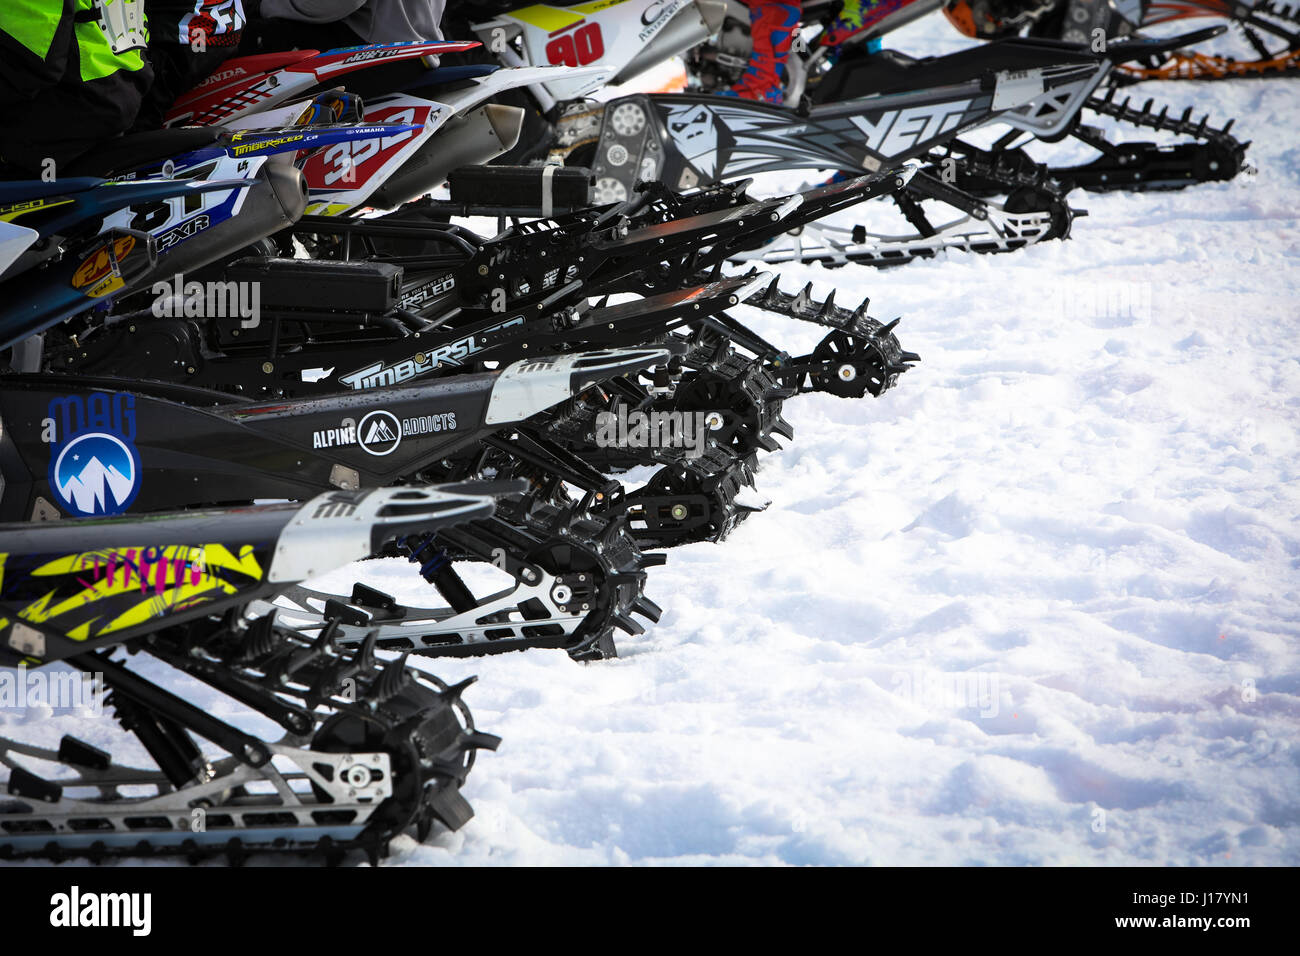 Snowbike Racing Stock Photo